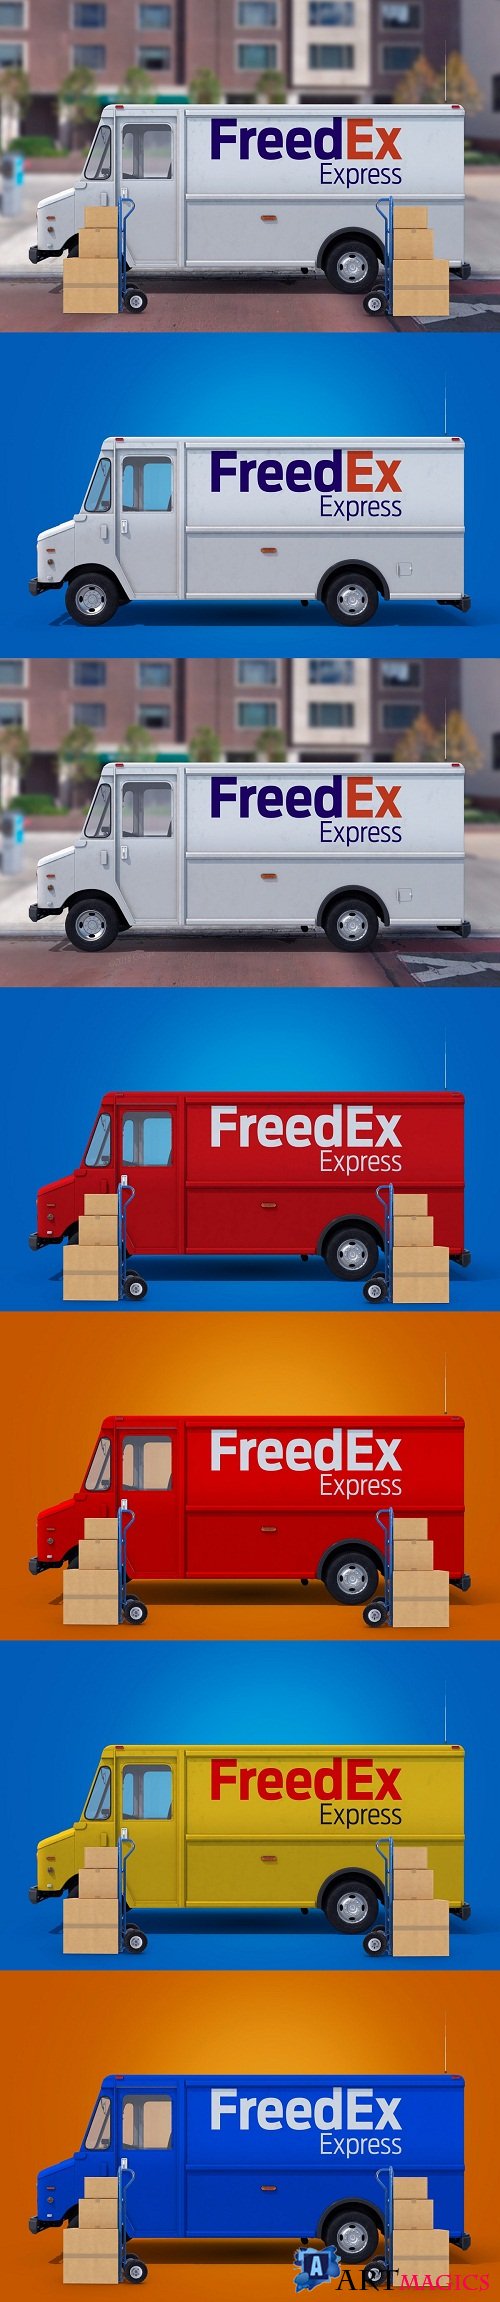 Mock-up Post Office Truck - 3071641